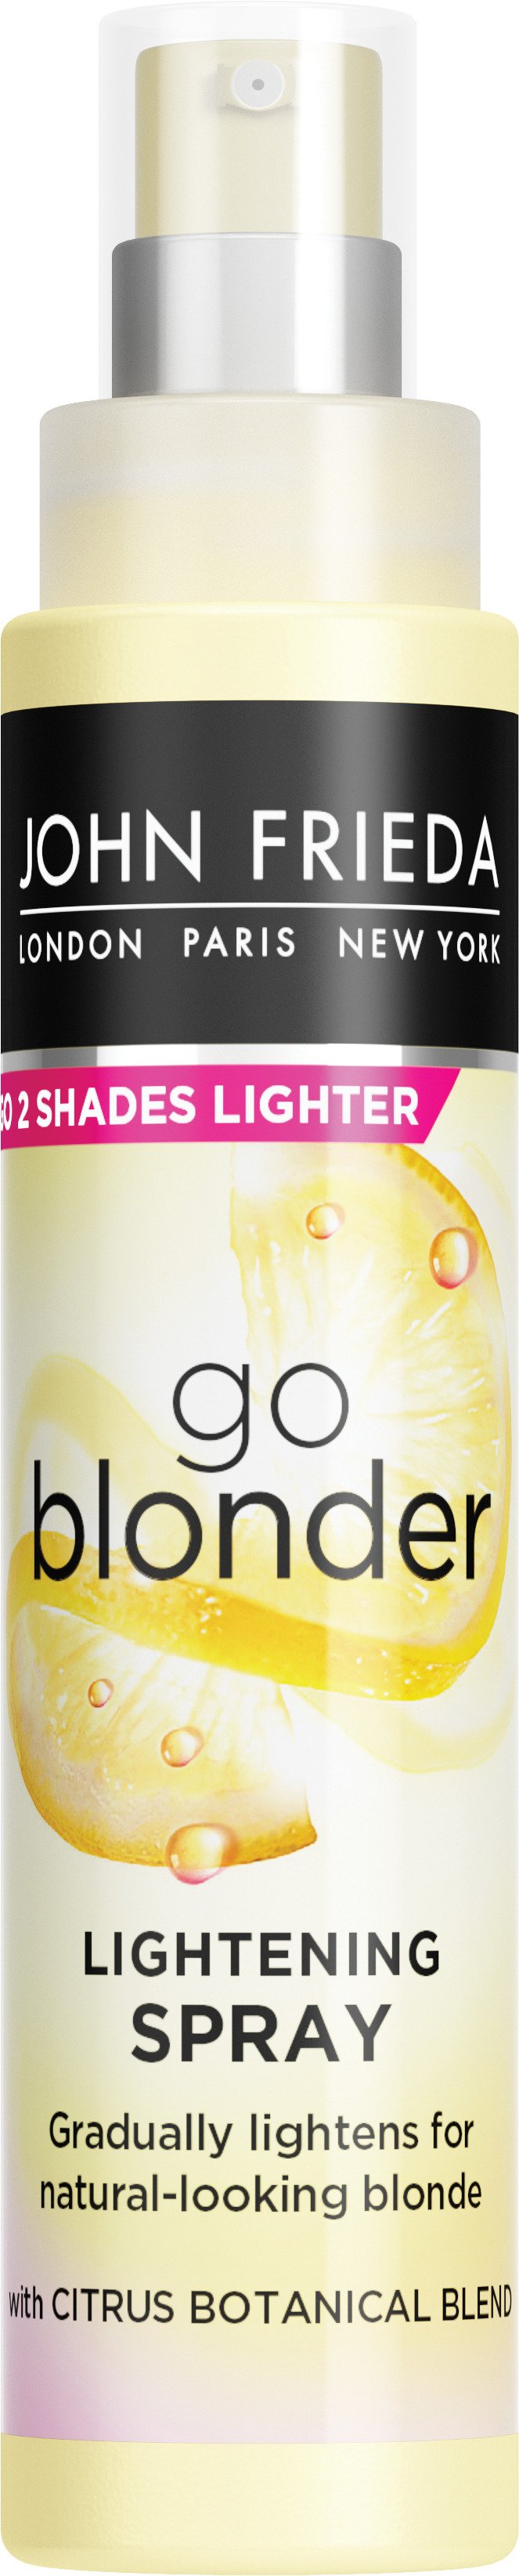 John Frieda Sheer Blonde Go Blonder Controlled Lightening Spray 100 ml